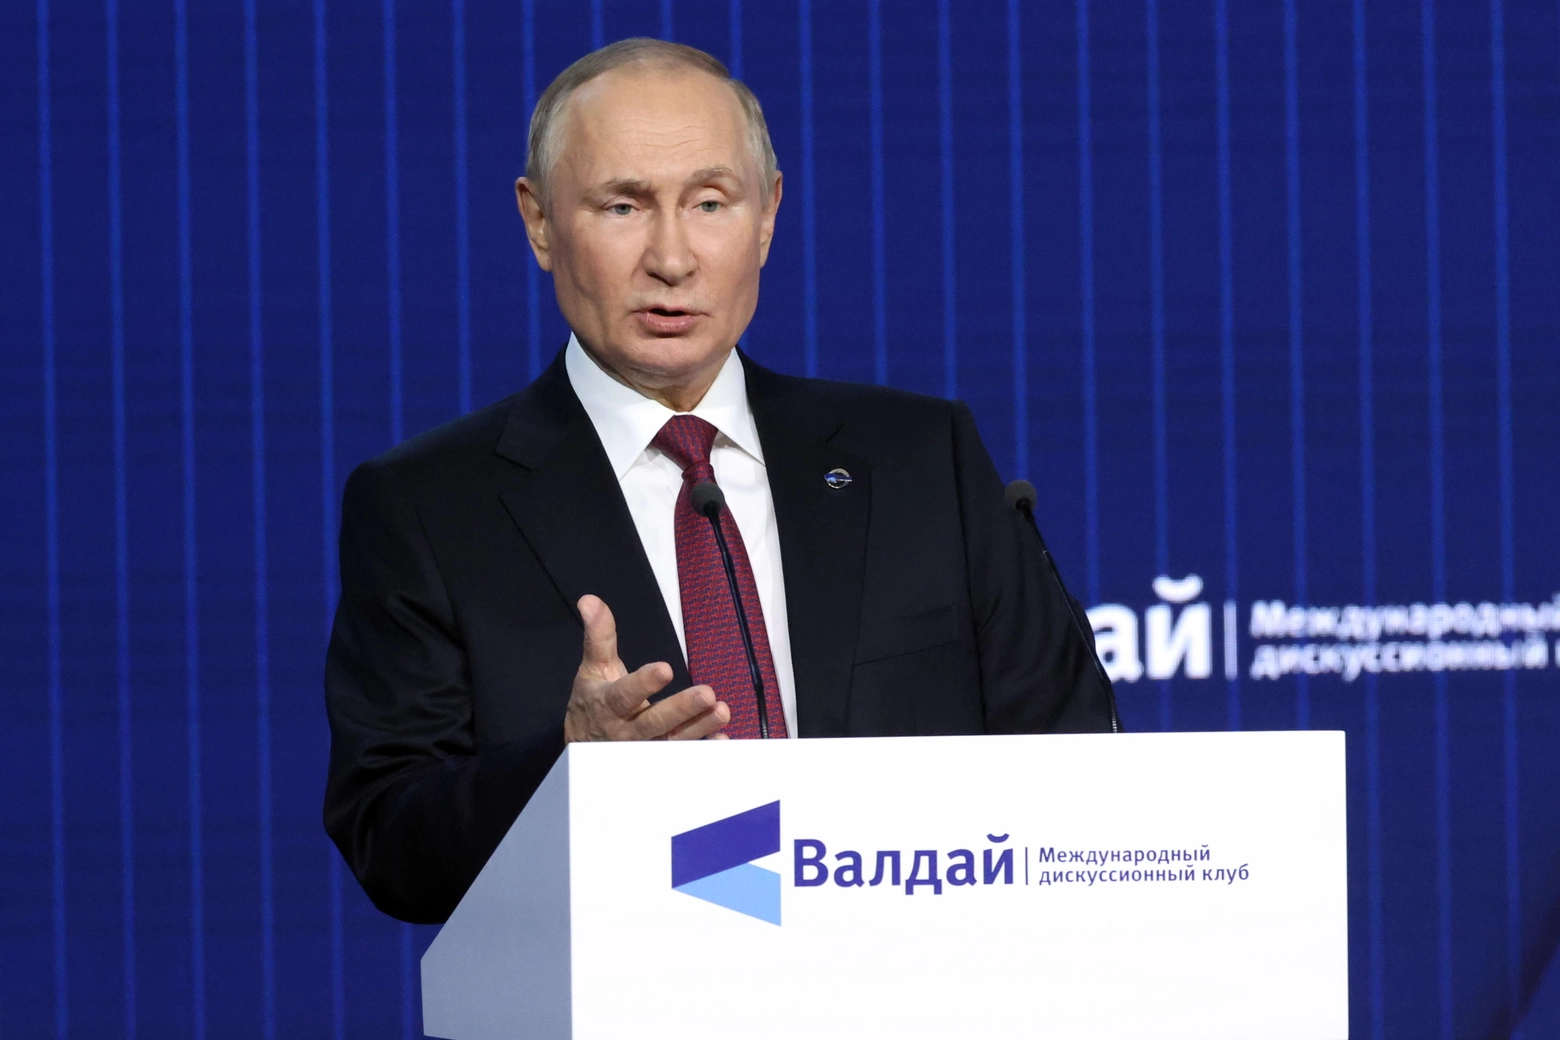 Il discorso di Vladimir Putin al Valdai Club, Mosca, 27 ottobre 2022 (Ansa)